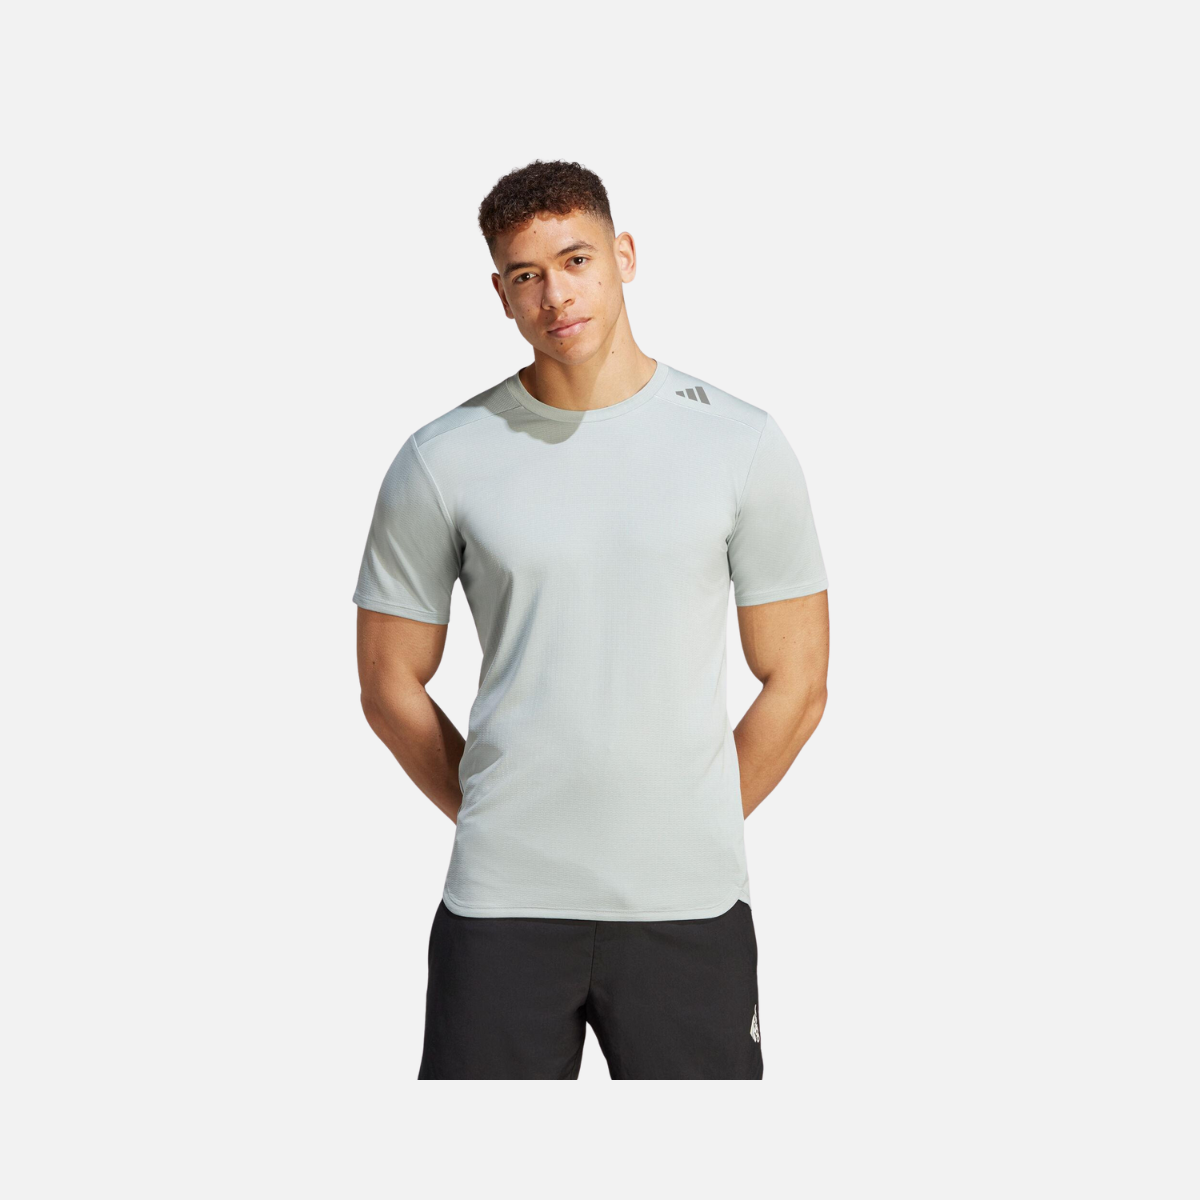 Adidas HIIT Training Men's Short Sleeve T-shirt -Wonder silver